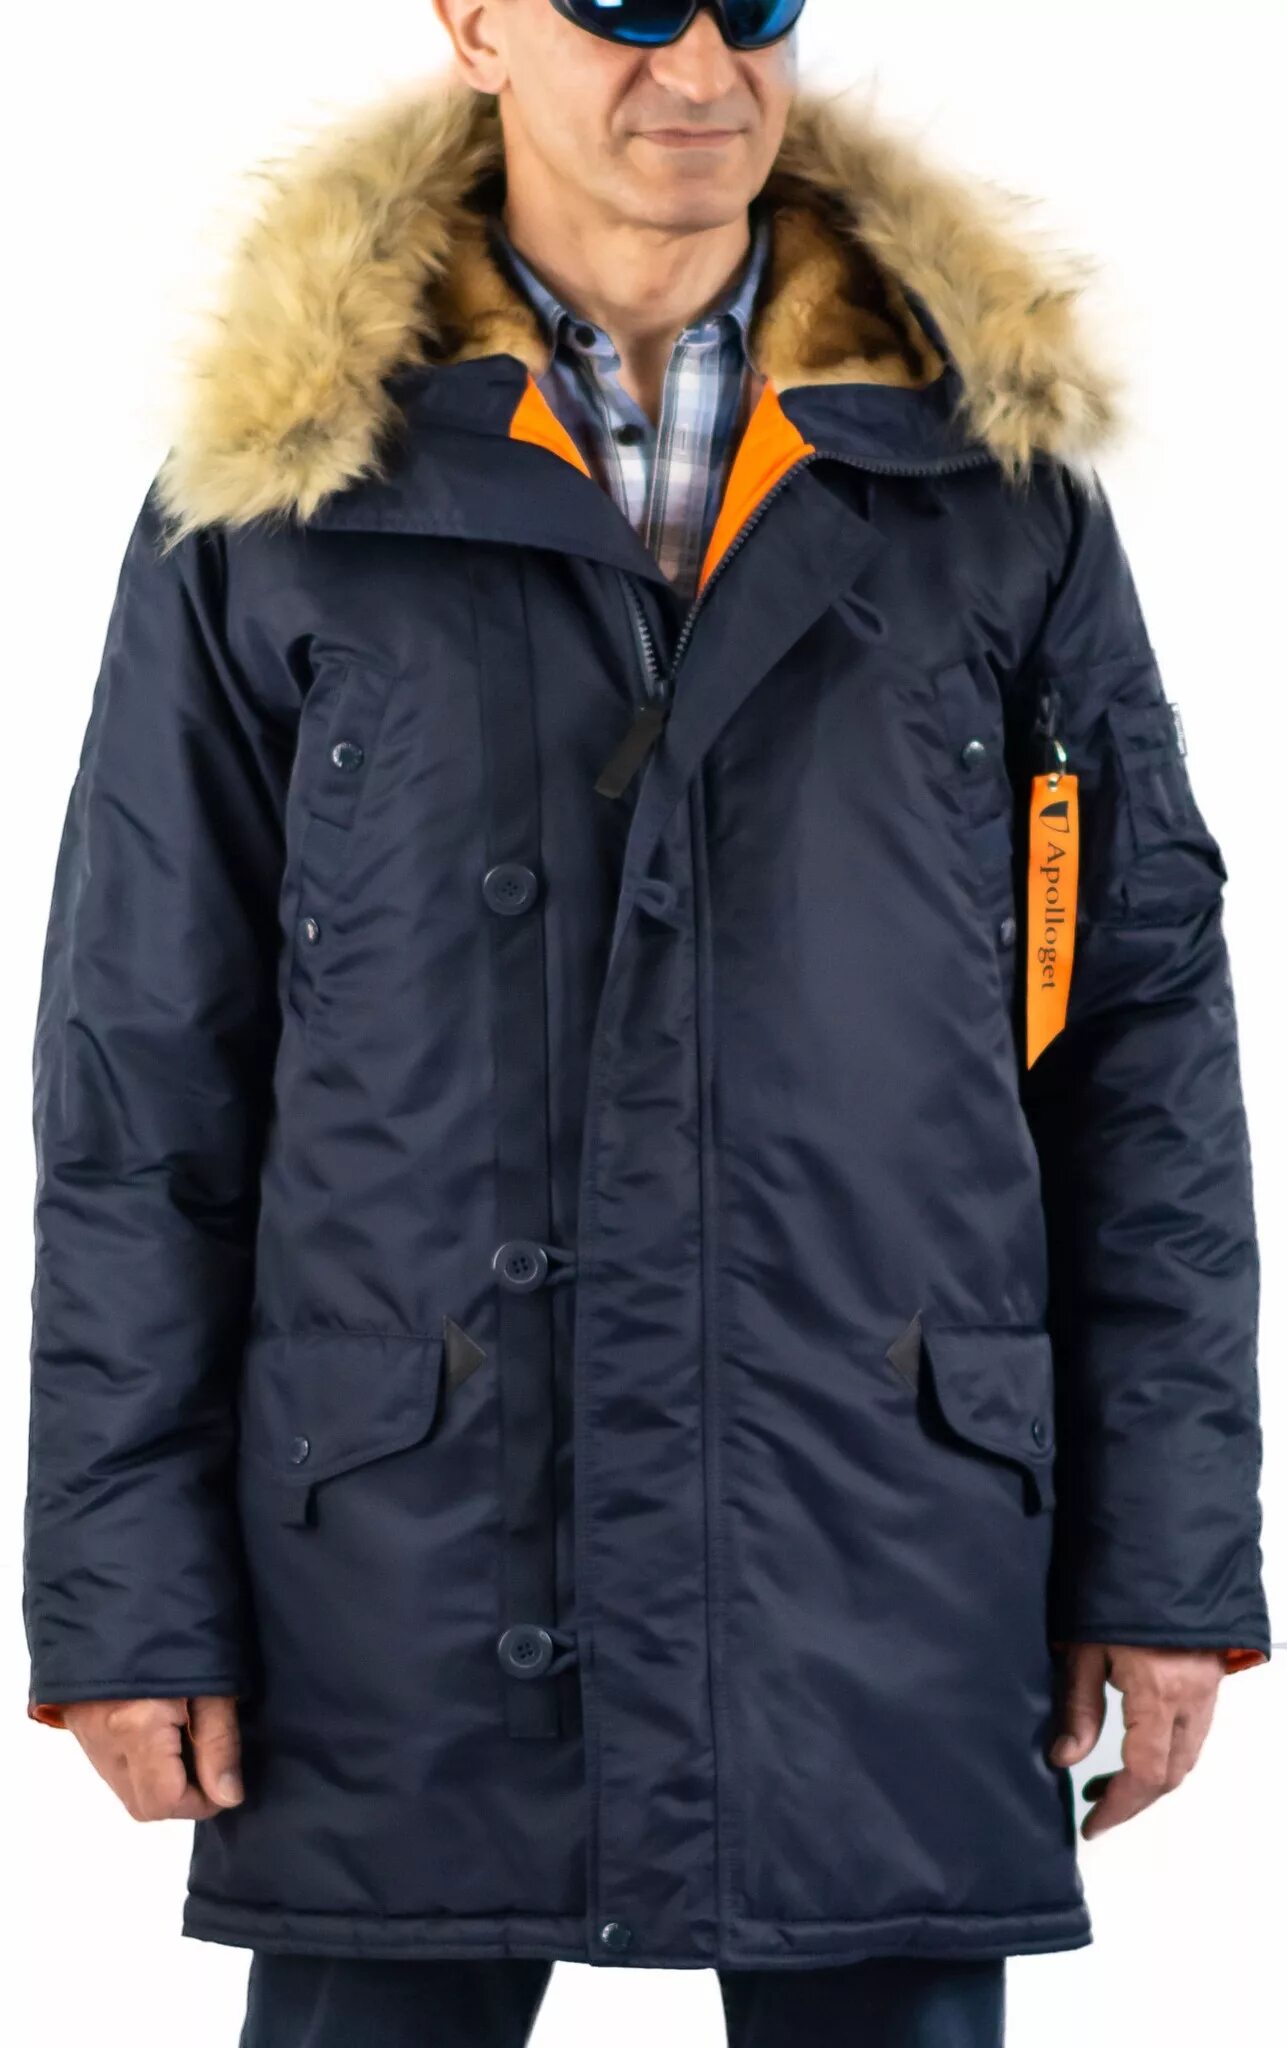 Куртка Аляска Husky long Olive/Orange Apolloget. Аляска зимняя мужская куртка 8xl. Зимняя куртка Аляска Airboss Parka. Аляска Husky Apolloget. Настоящая аляска куртка